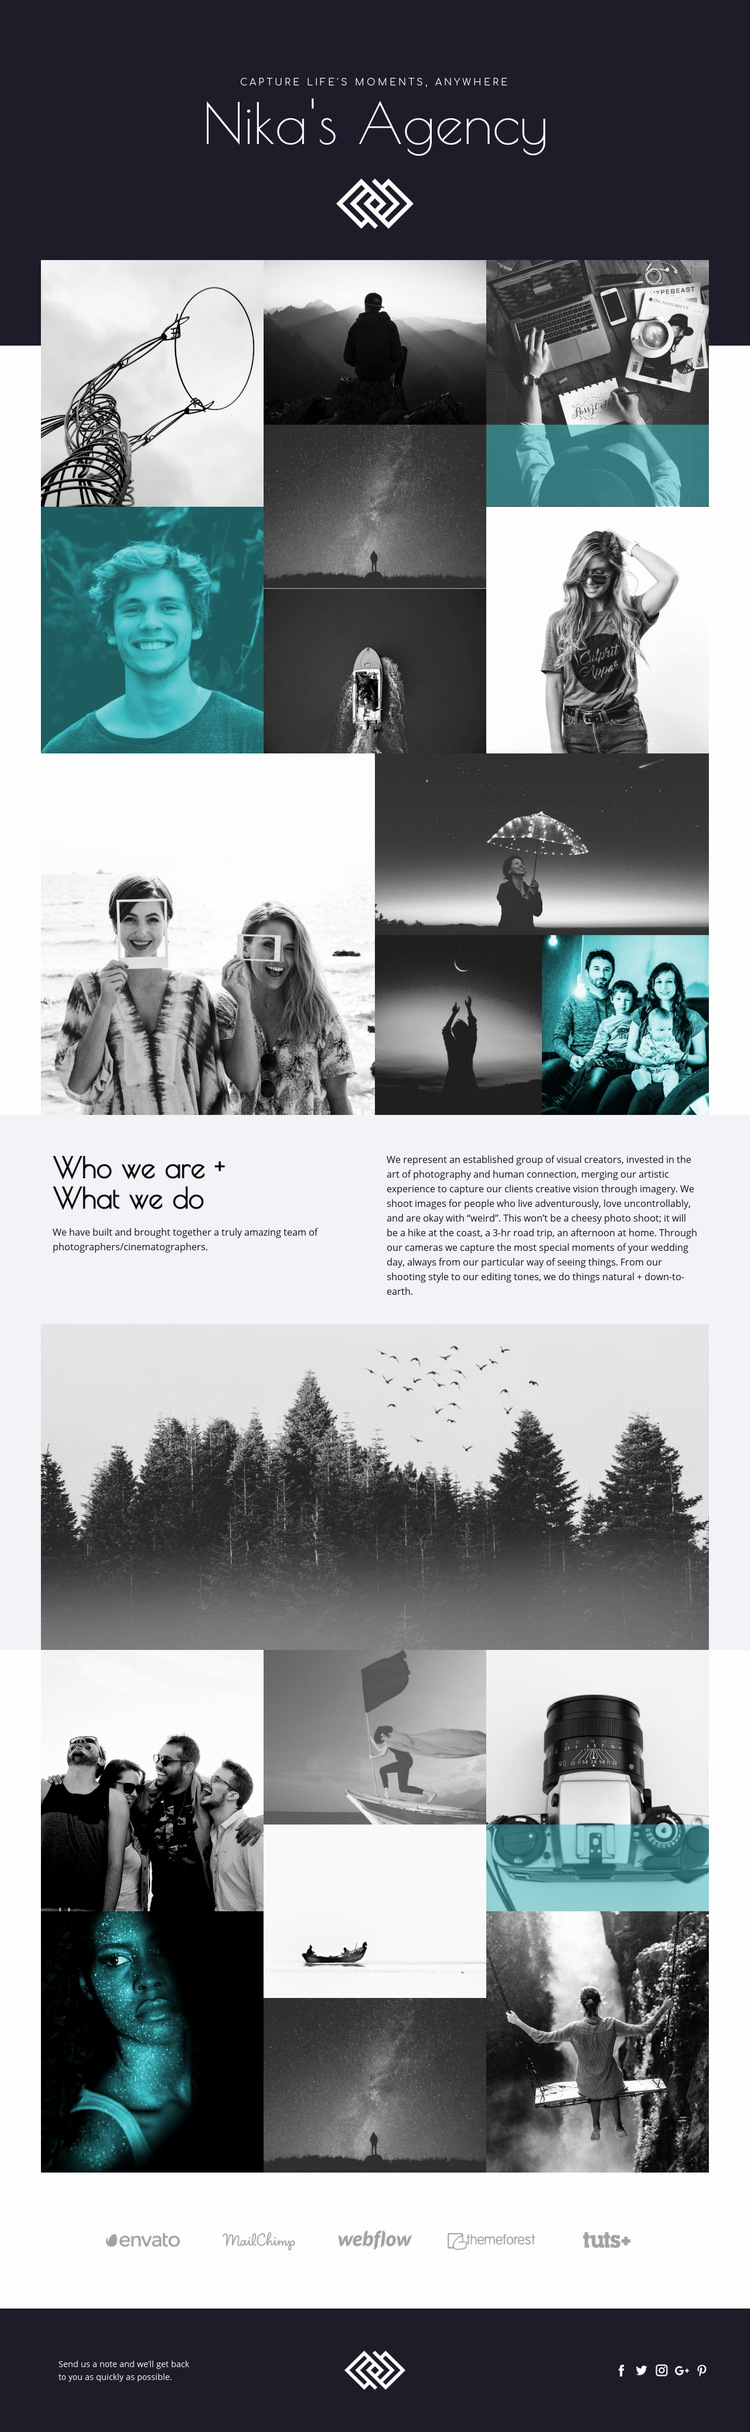 Nika's Agency Web Page Design